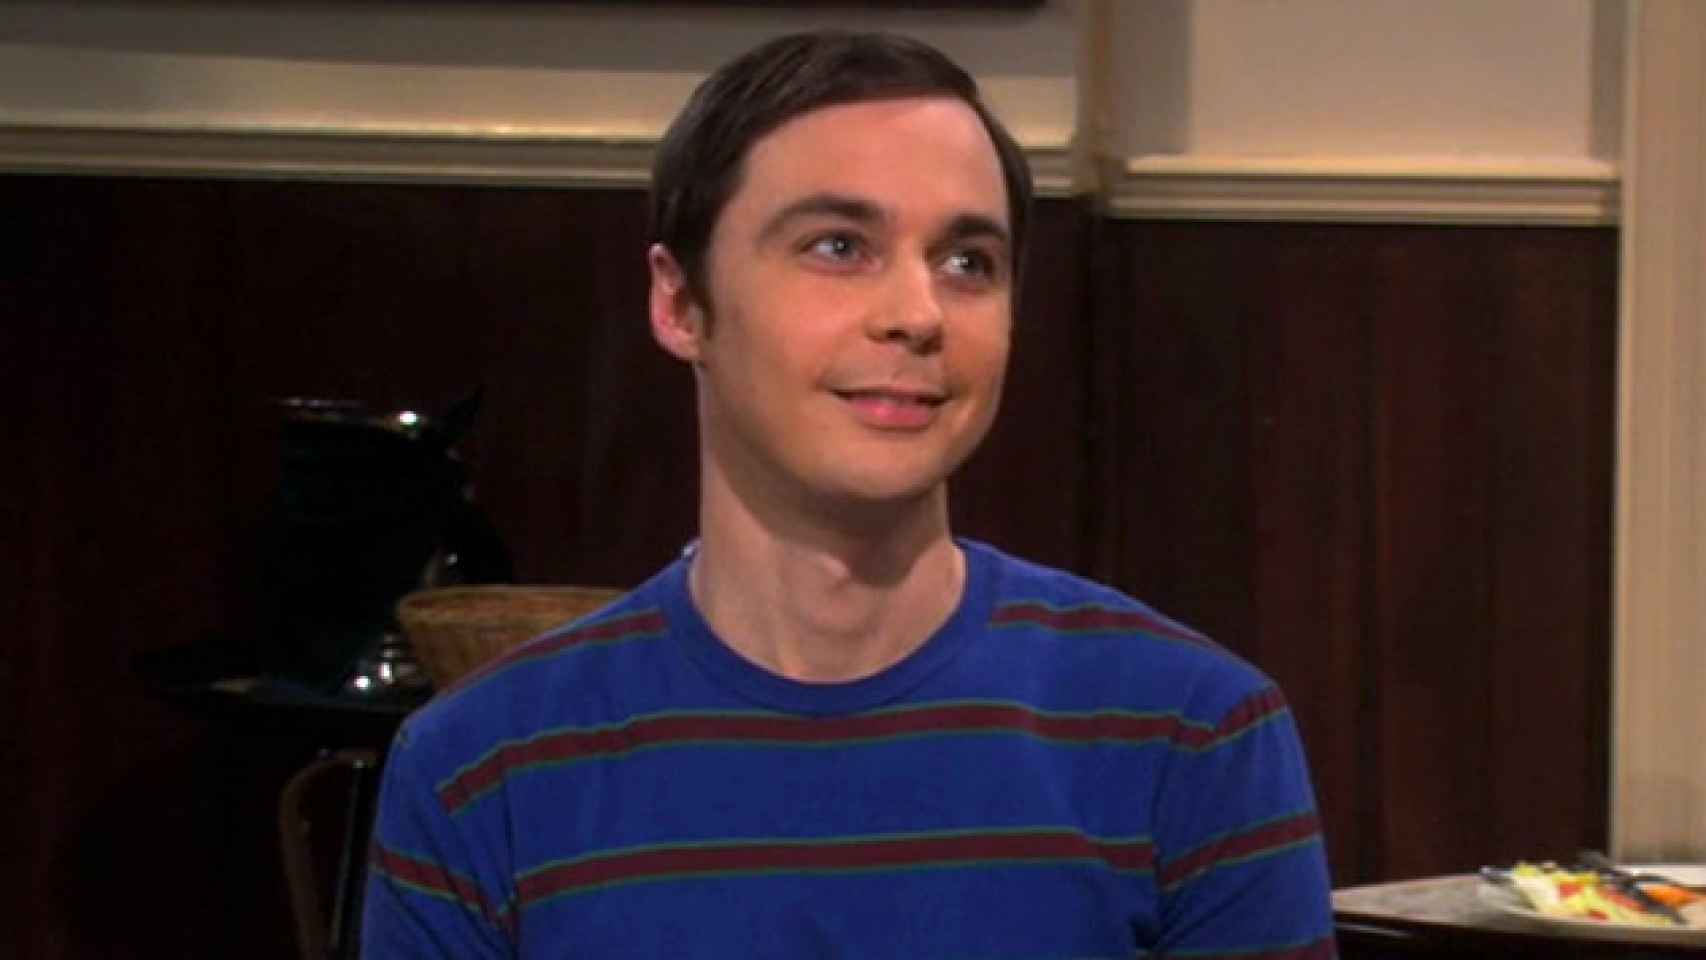 Jim Parsons como Sheldon Cooper en 'The Big Bang Theory'